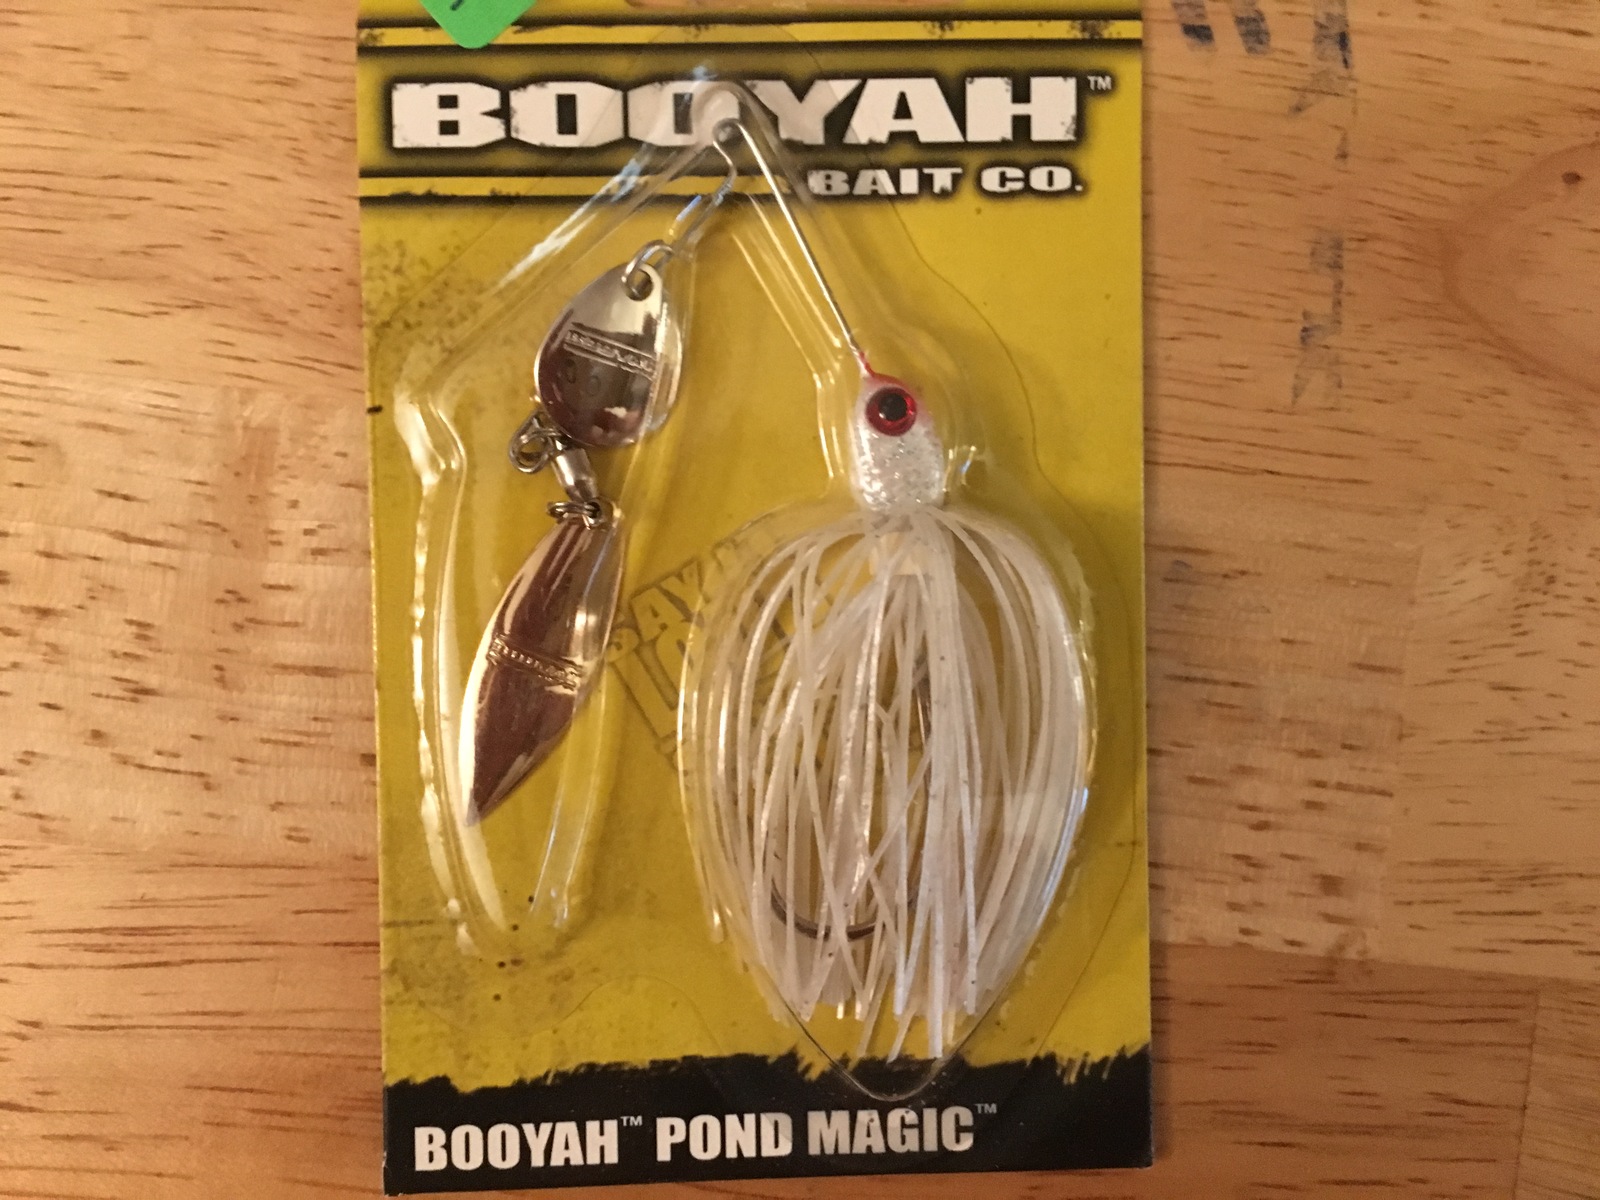 New Boo Yah Pond Magic Lure - $7.99